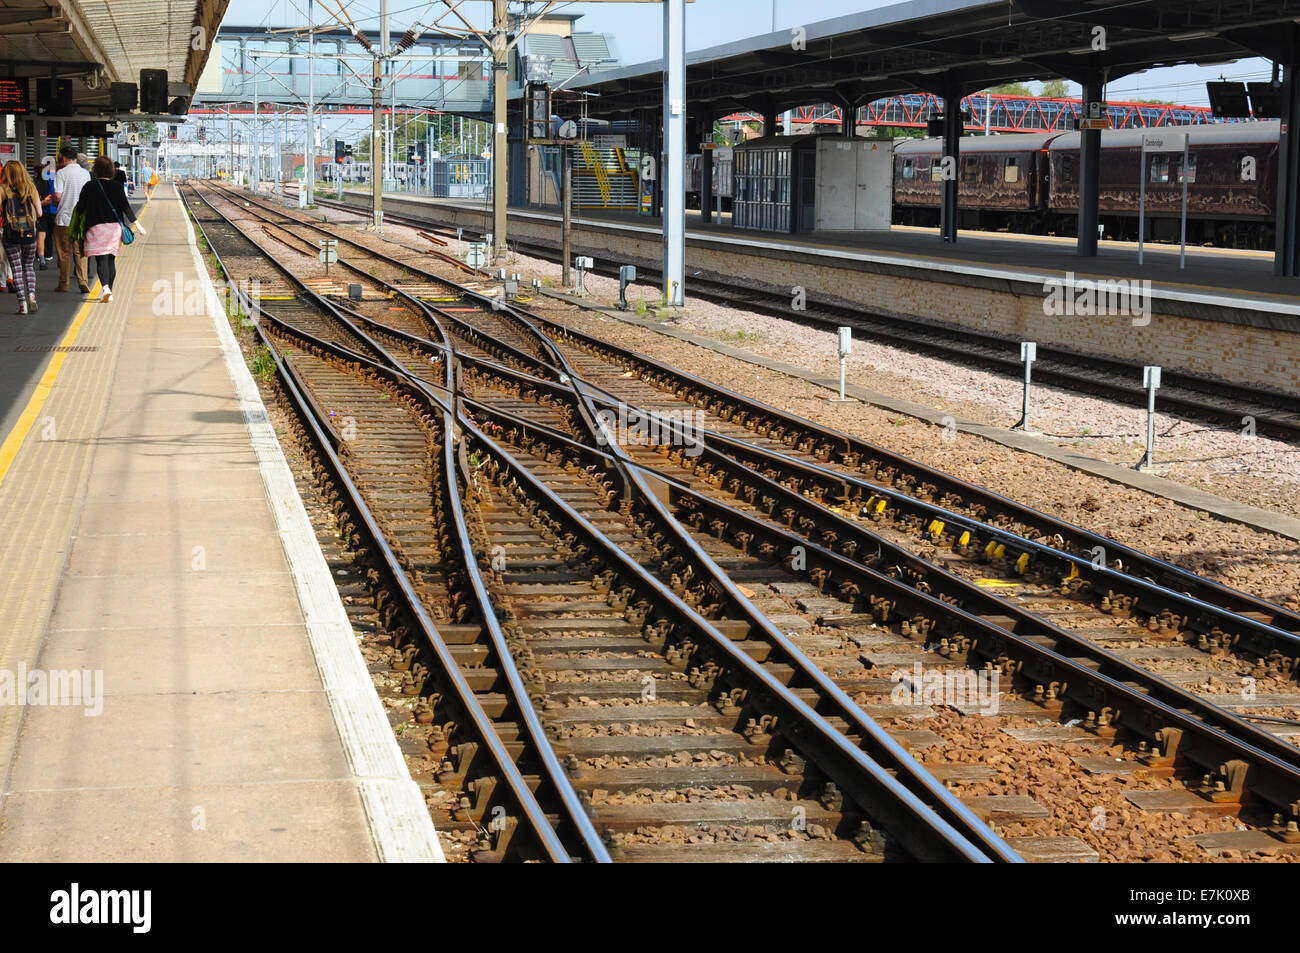 scissors-crossover-alongside-the-platform-at-cambridge-railway-station-E7K0XB.jpg